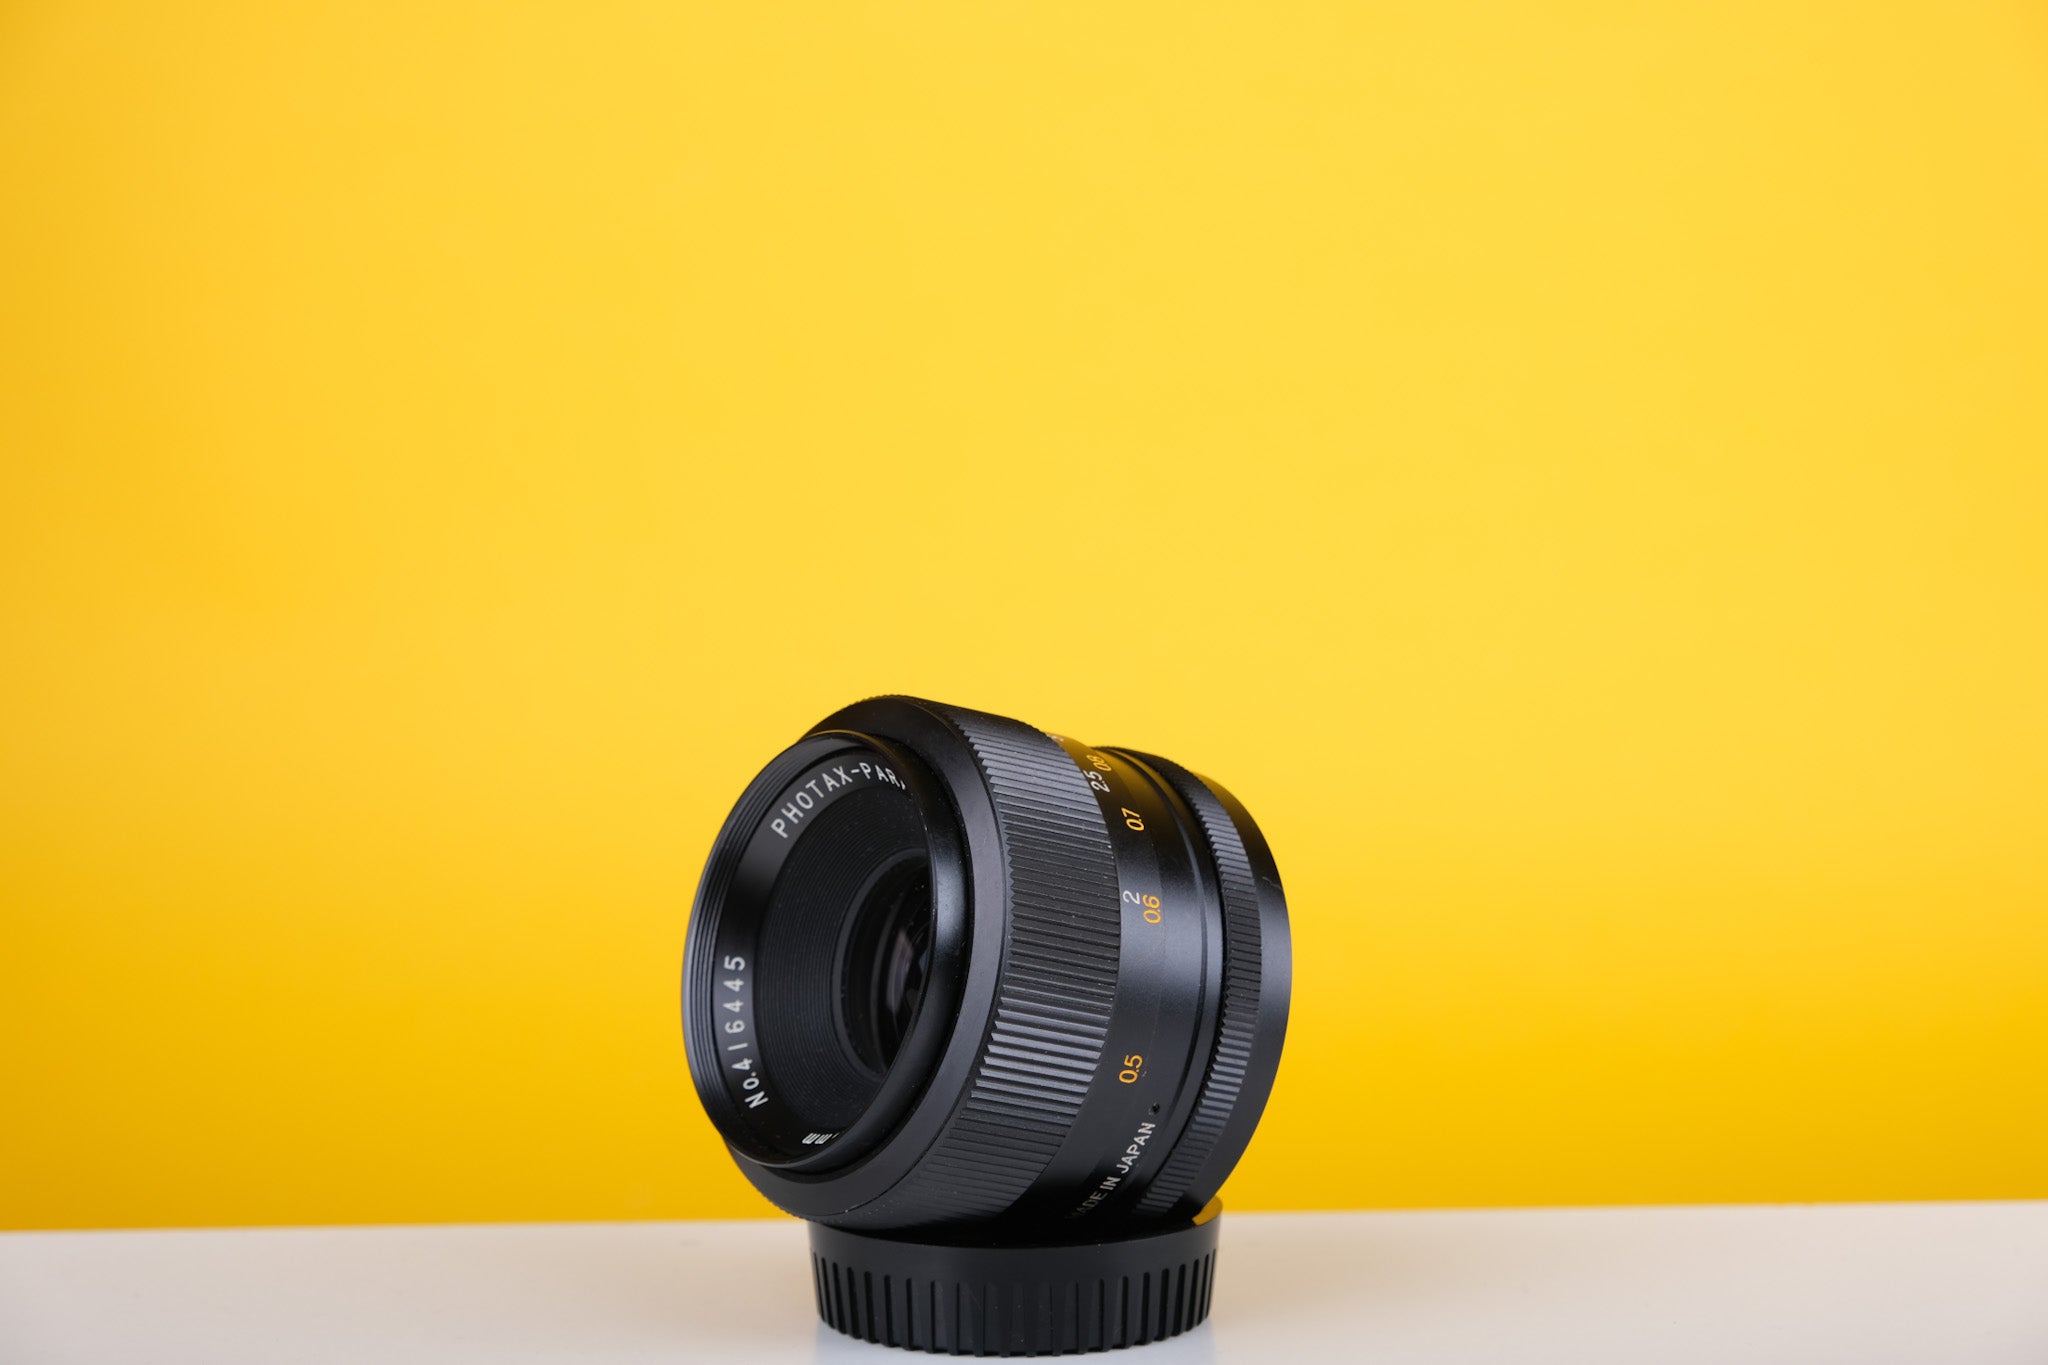 Photax-Paragon 35mm f2.8 Nikon Lens